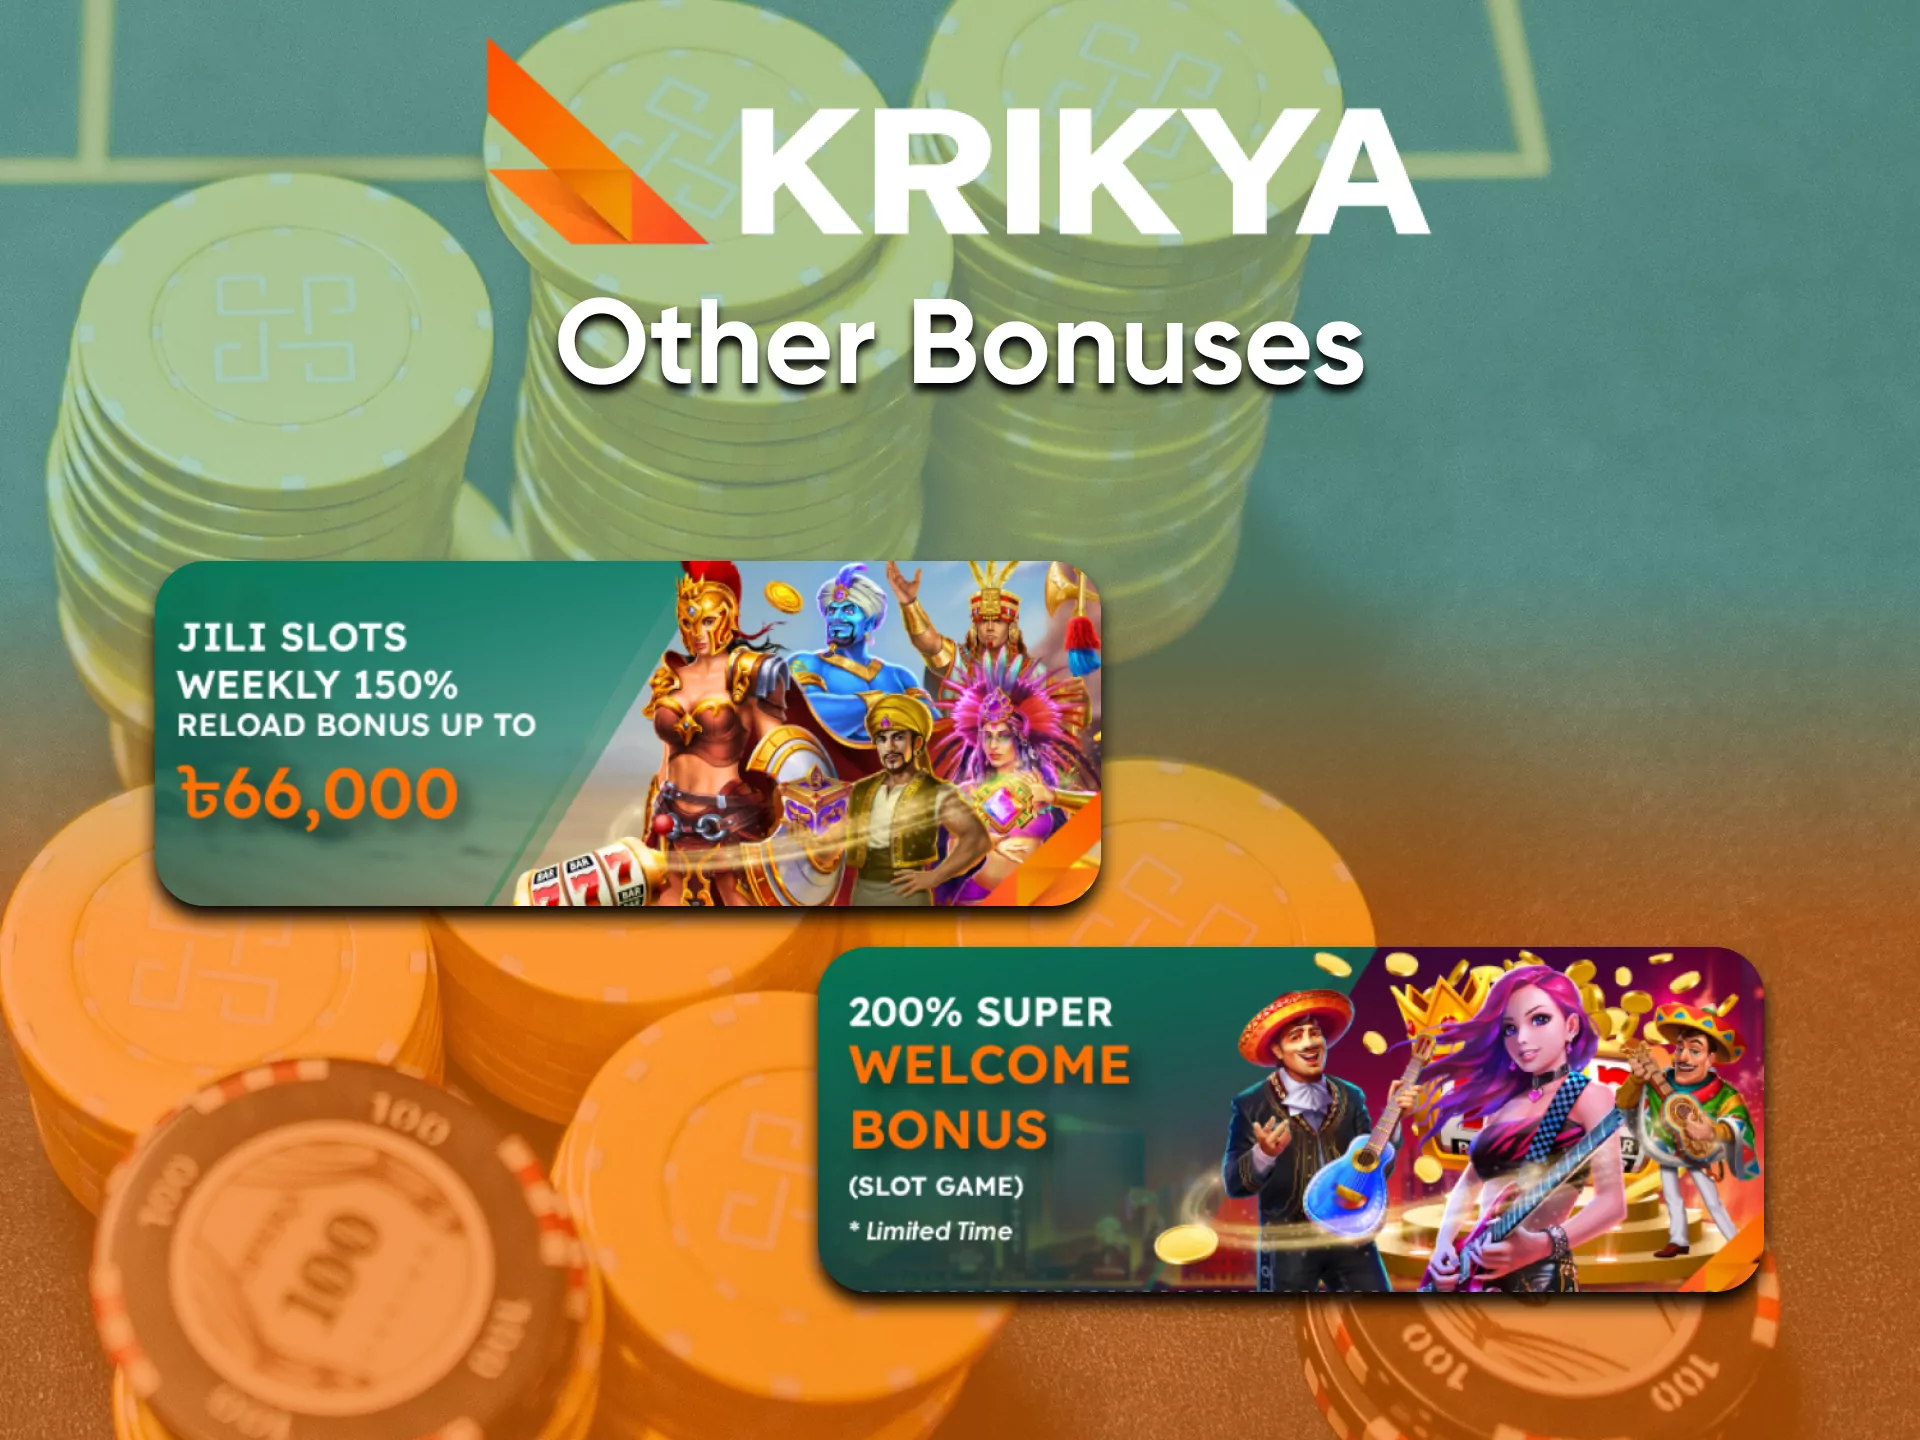 When you play at Krikya Casino, you get various bonuses.